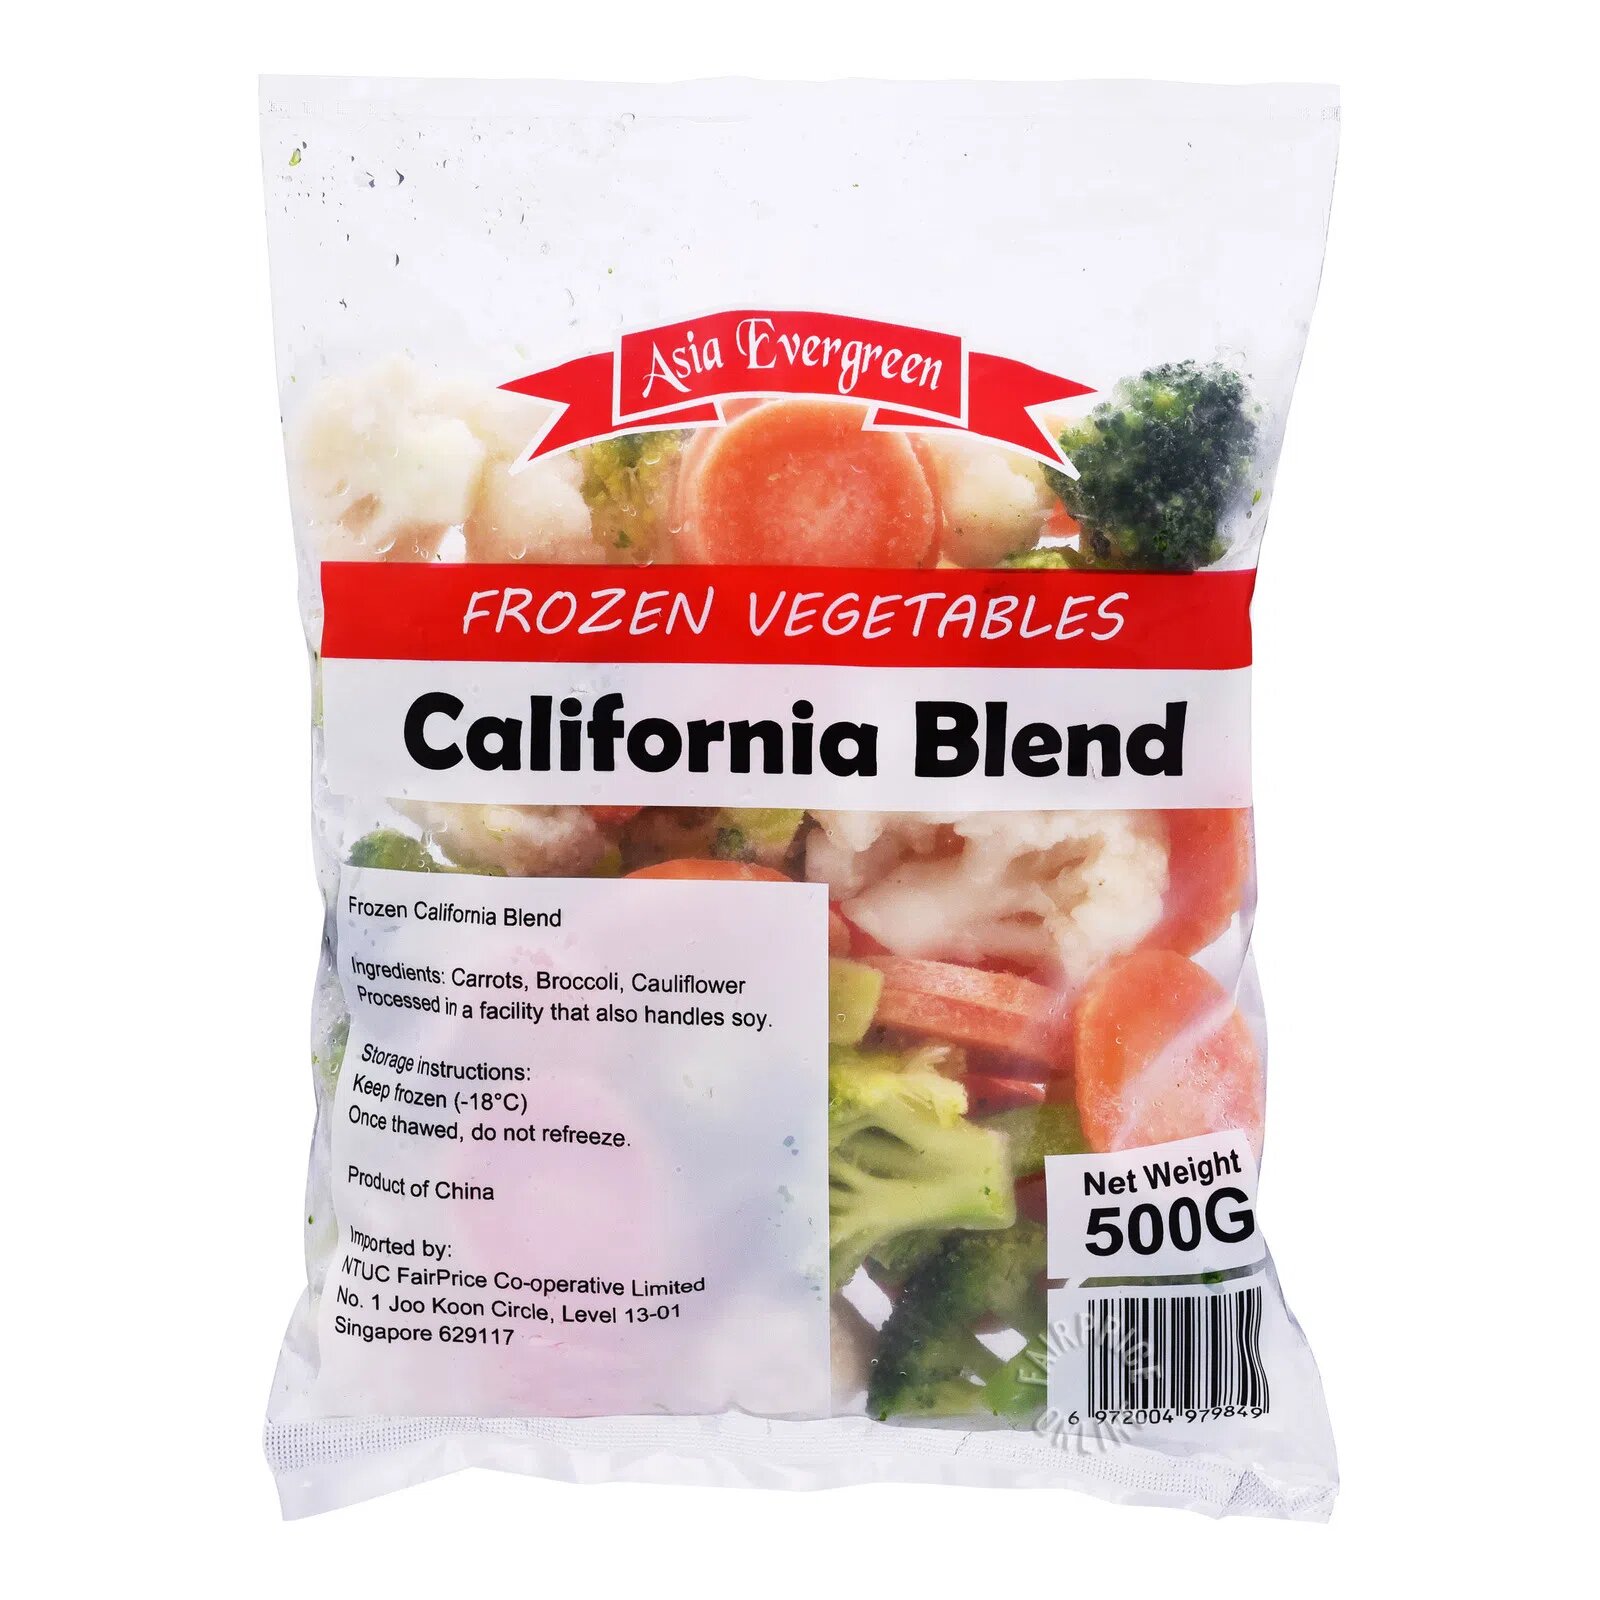 Asia Evergreen Frozen Vegetables - California Blend